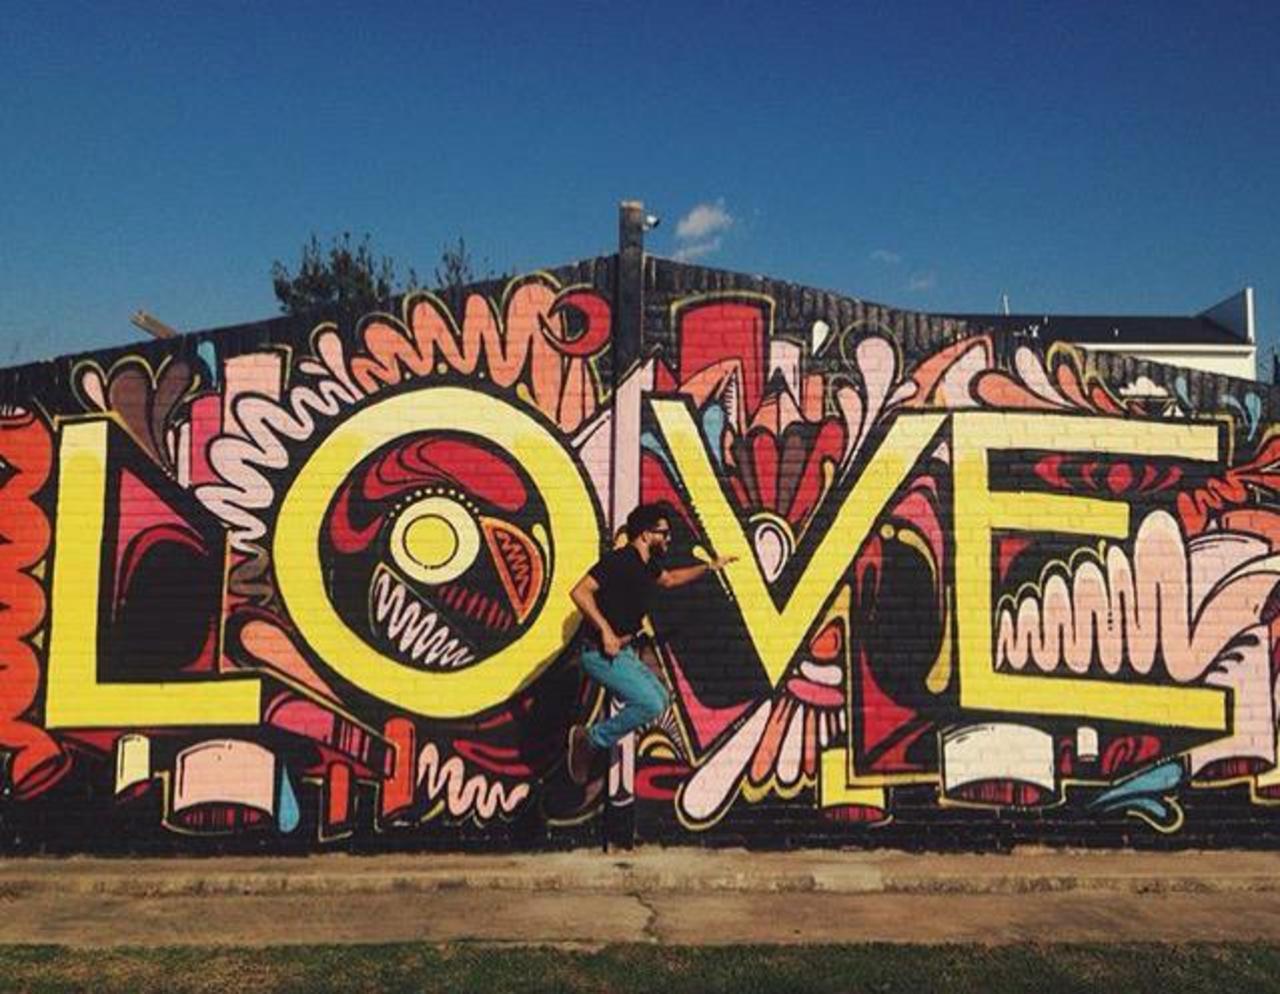 Love ❤️
Street Art by WileyArt

#art #graffiti #mural #streetart http://t.co/z8GqfZLXM7